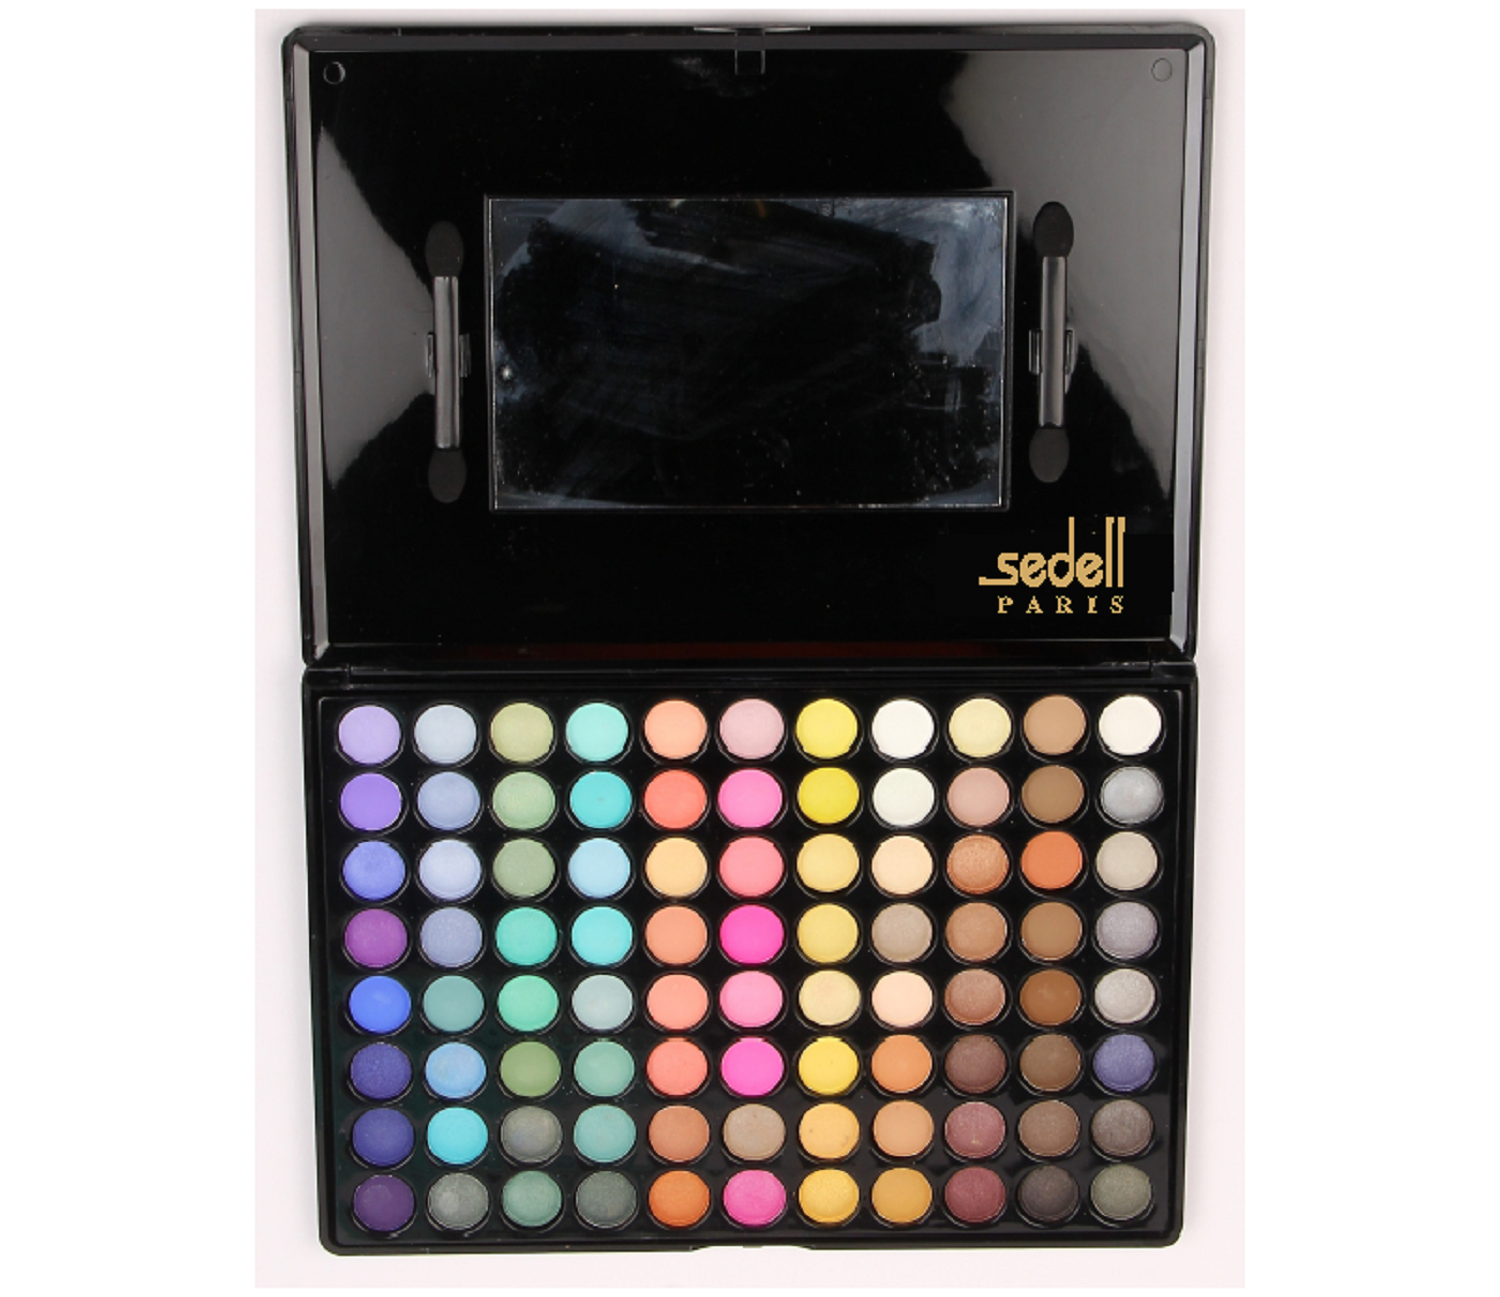 Sedel Professional  Angel wings Shimmer Matte Powder Makeup  Eye Shadow Palette-Set of 88 Colors